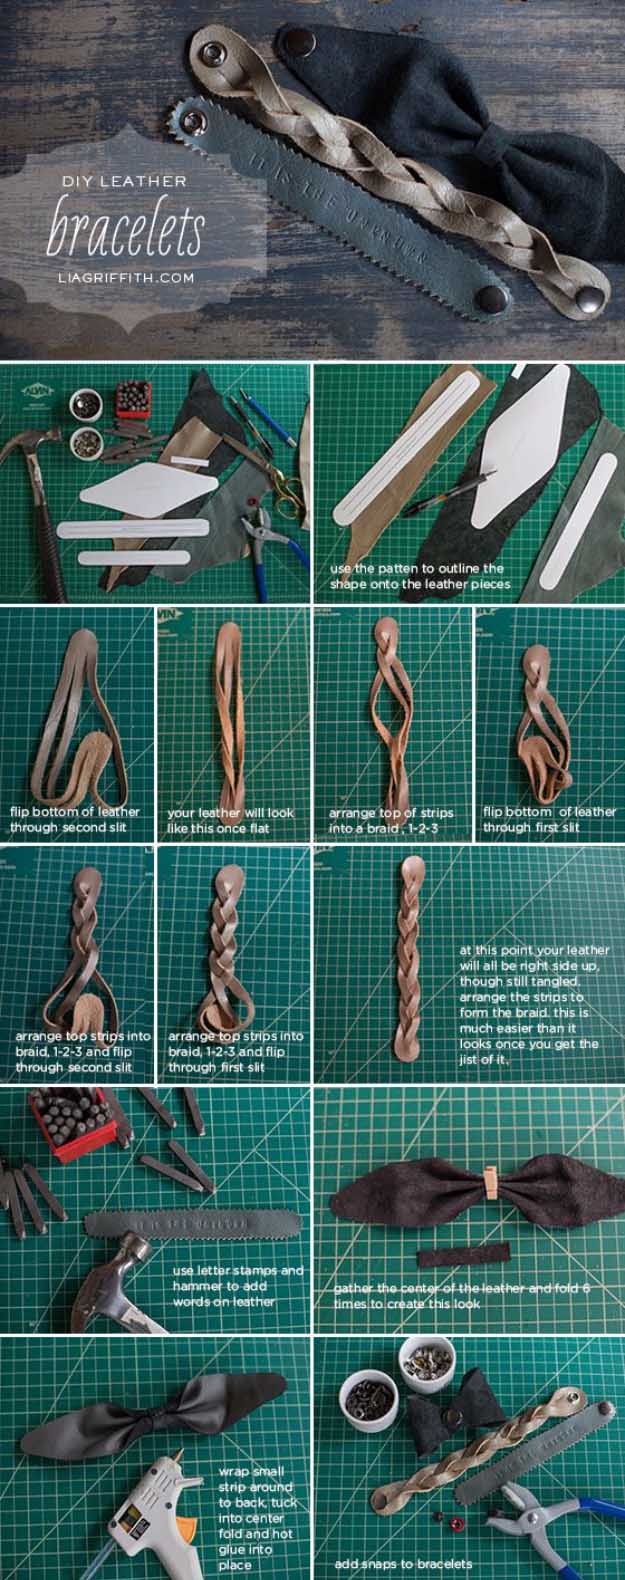 How to: Build a DIY Knife Sharpening Jig - ManMadeDIY